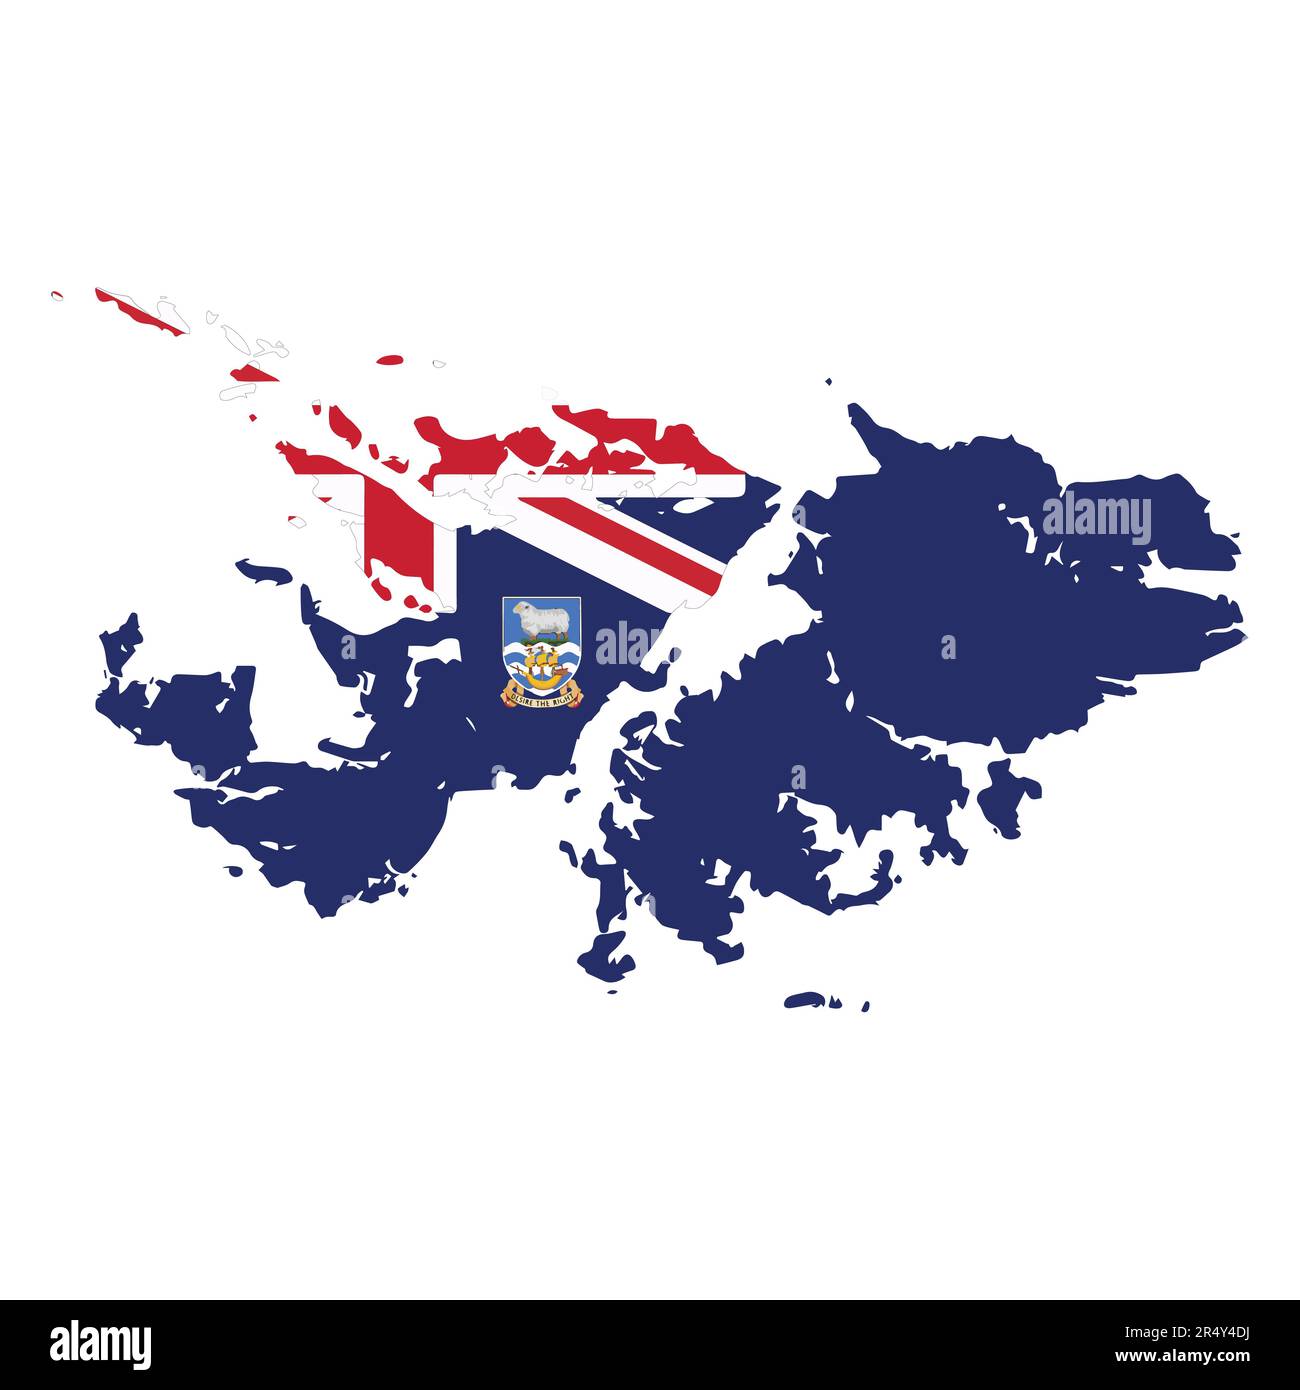 Falklandinseln (Islas Malvinas) Vektordarstellung Flagge und Kartenlogo Designkonzept detailliert Stock Vektor